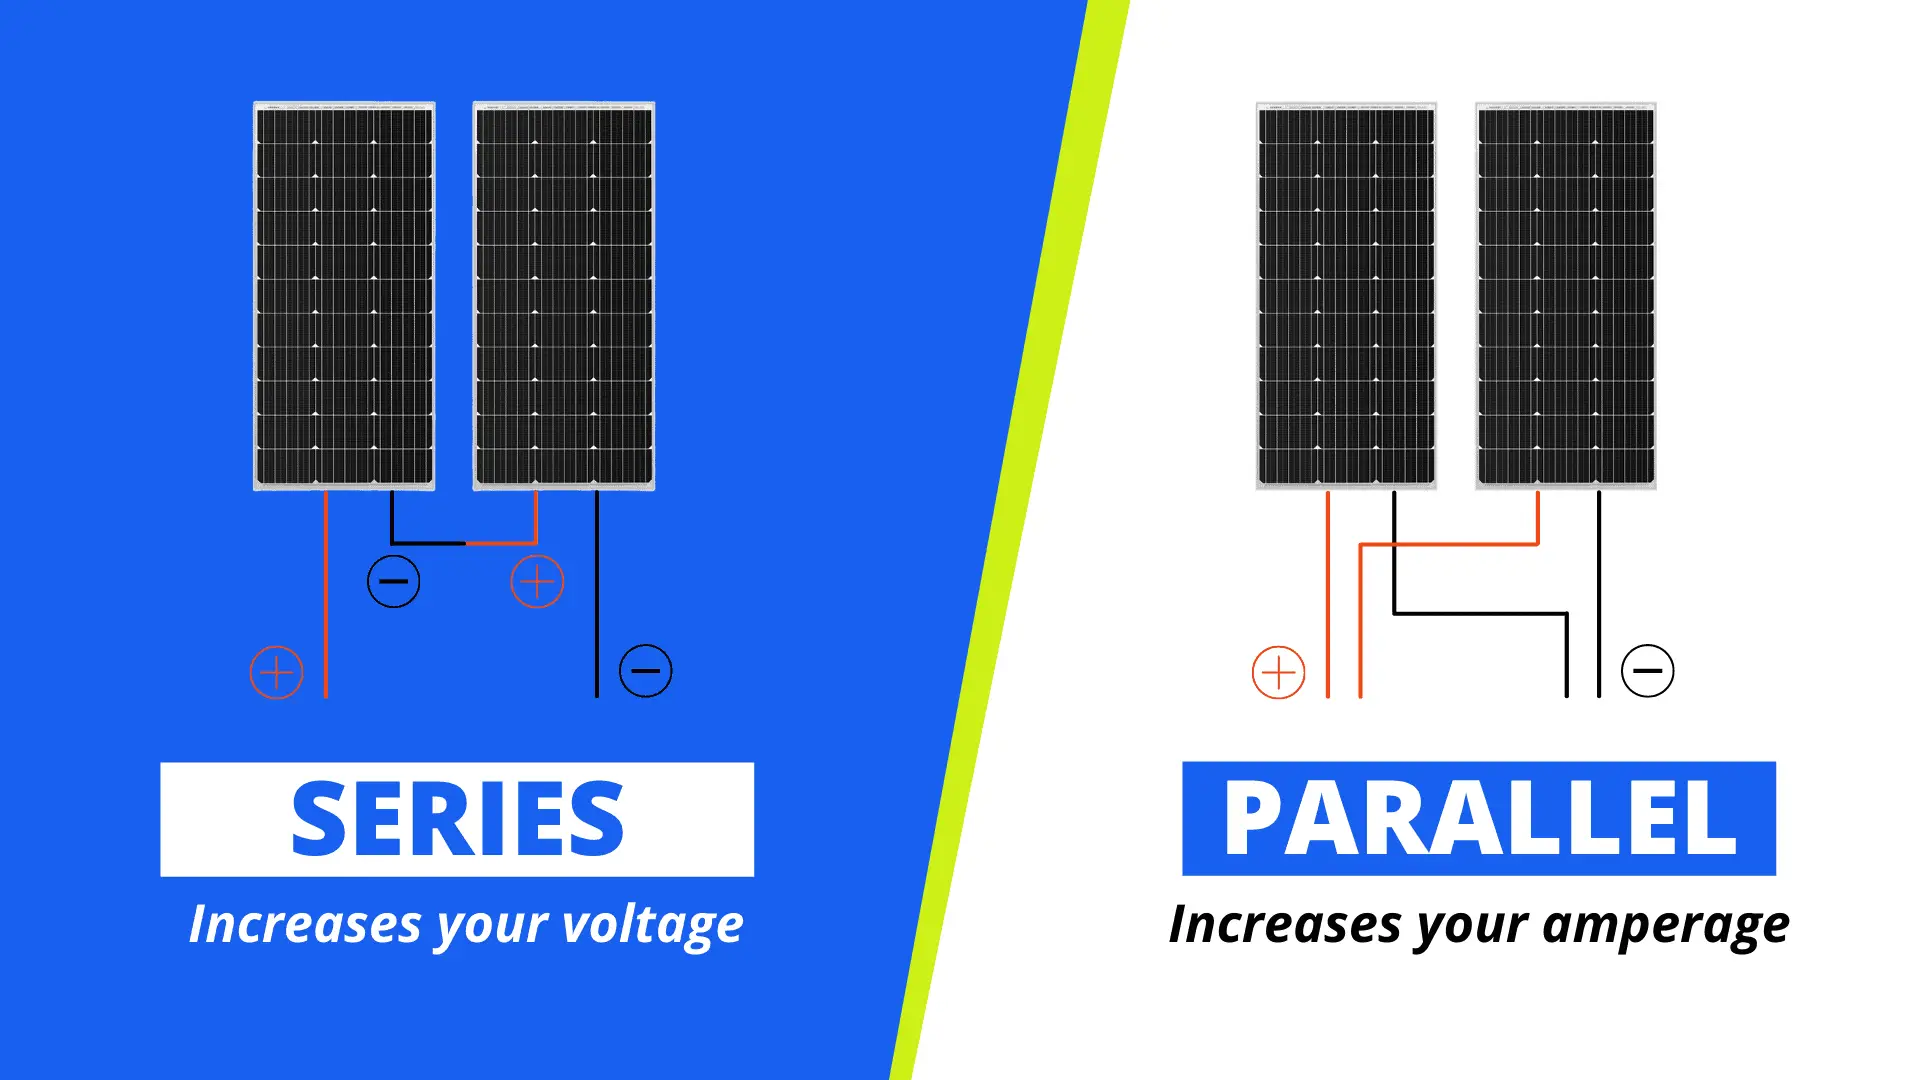 Series vs parallel